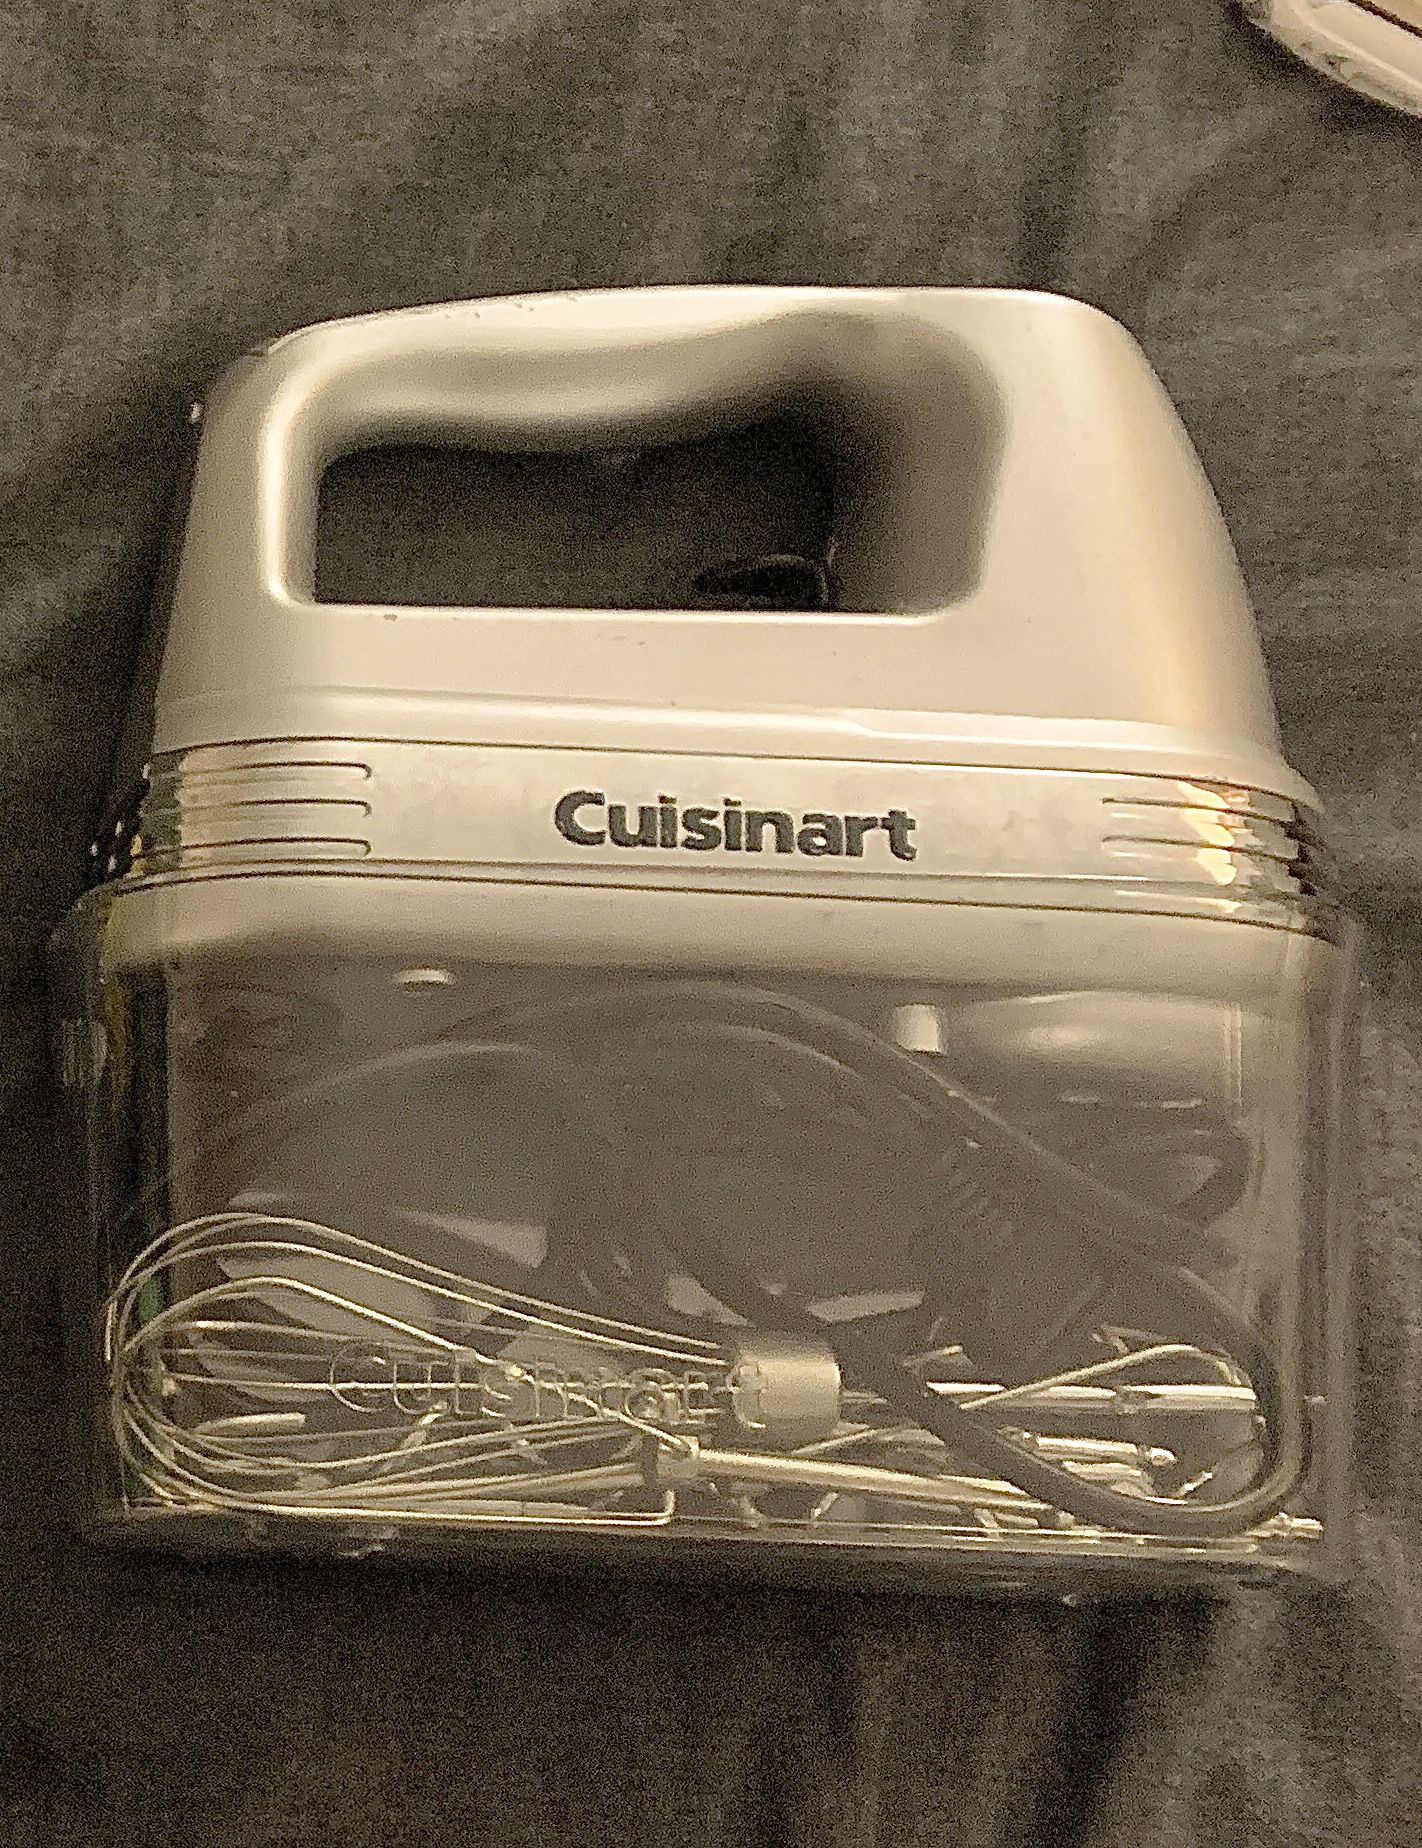 Cuisinart Handheld Mixer for Sale in Gig Harbor, WA - OfferUp